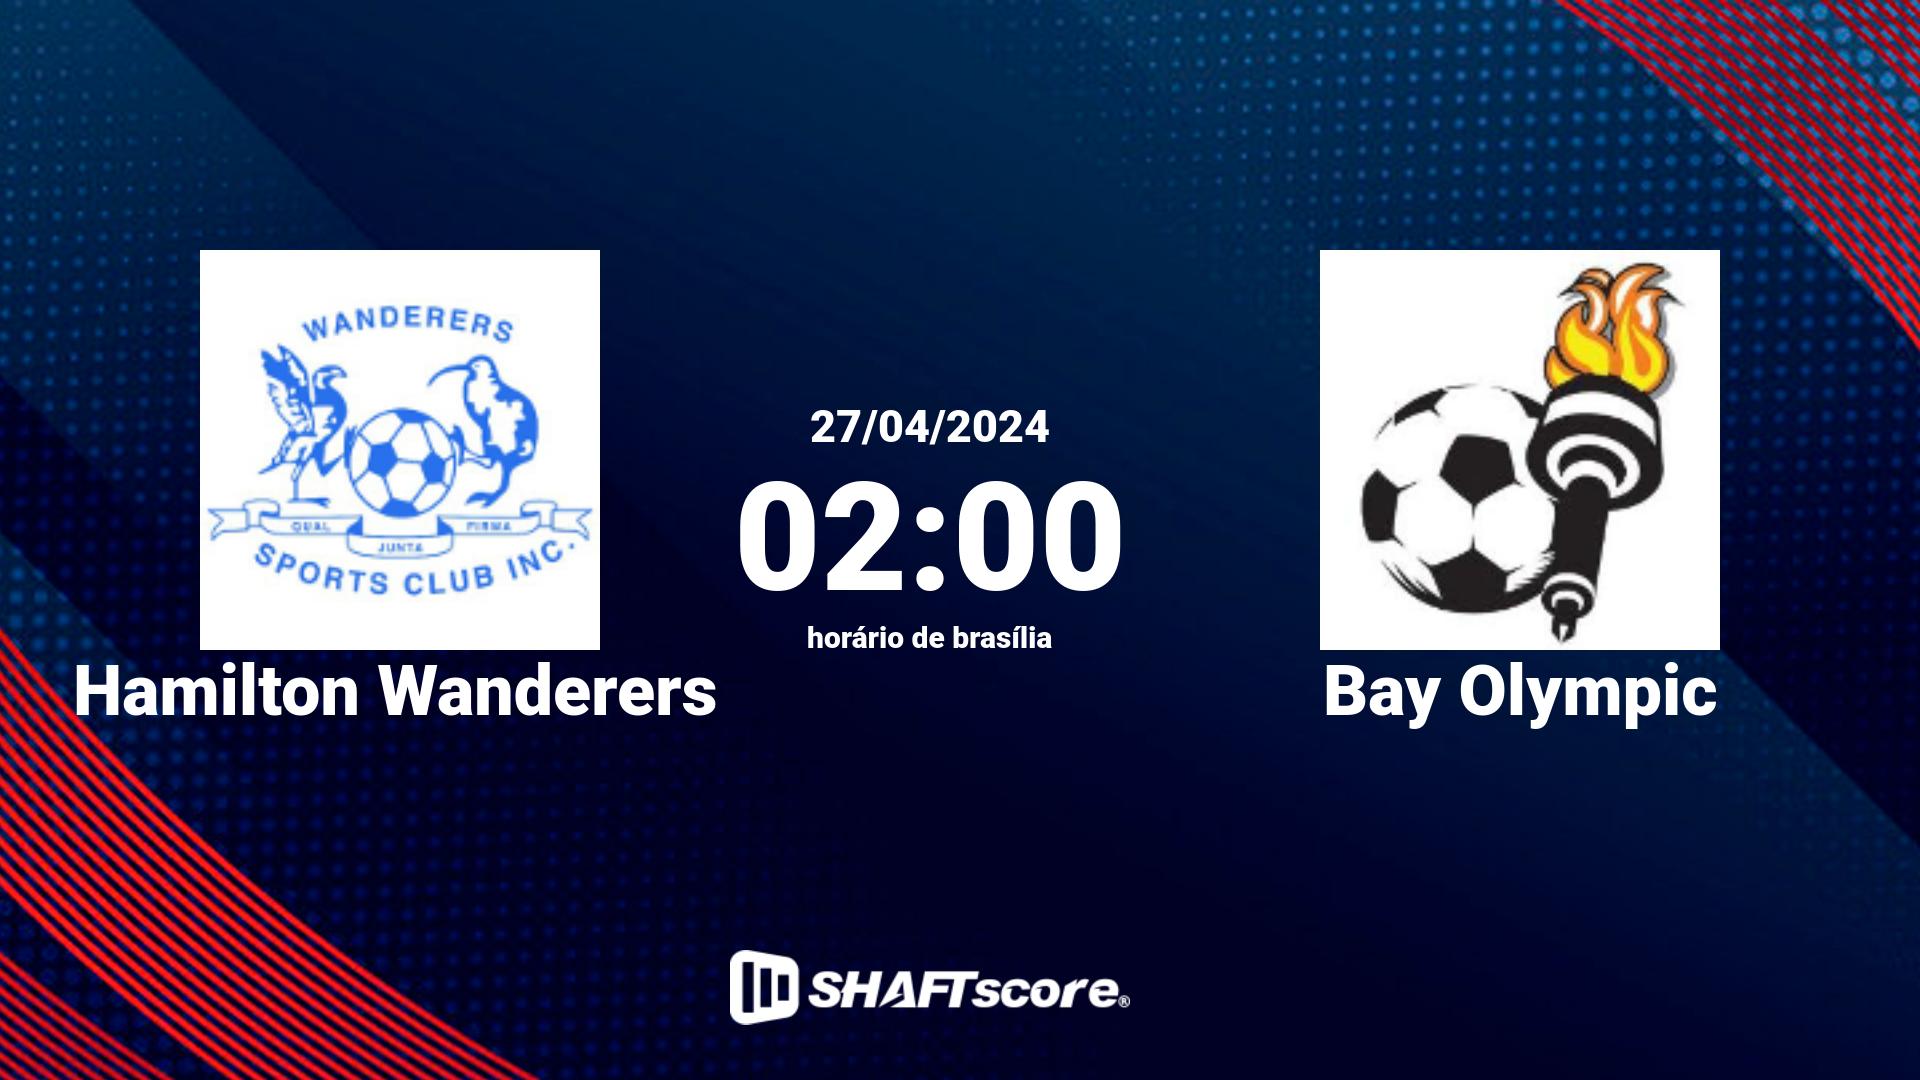 Estatísticas do jogo Hamilton Wanderers vs Bay Olympic 27.04 02:00